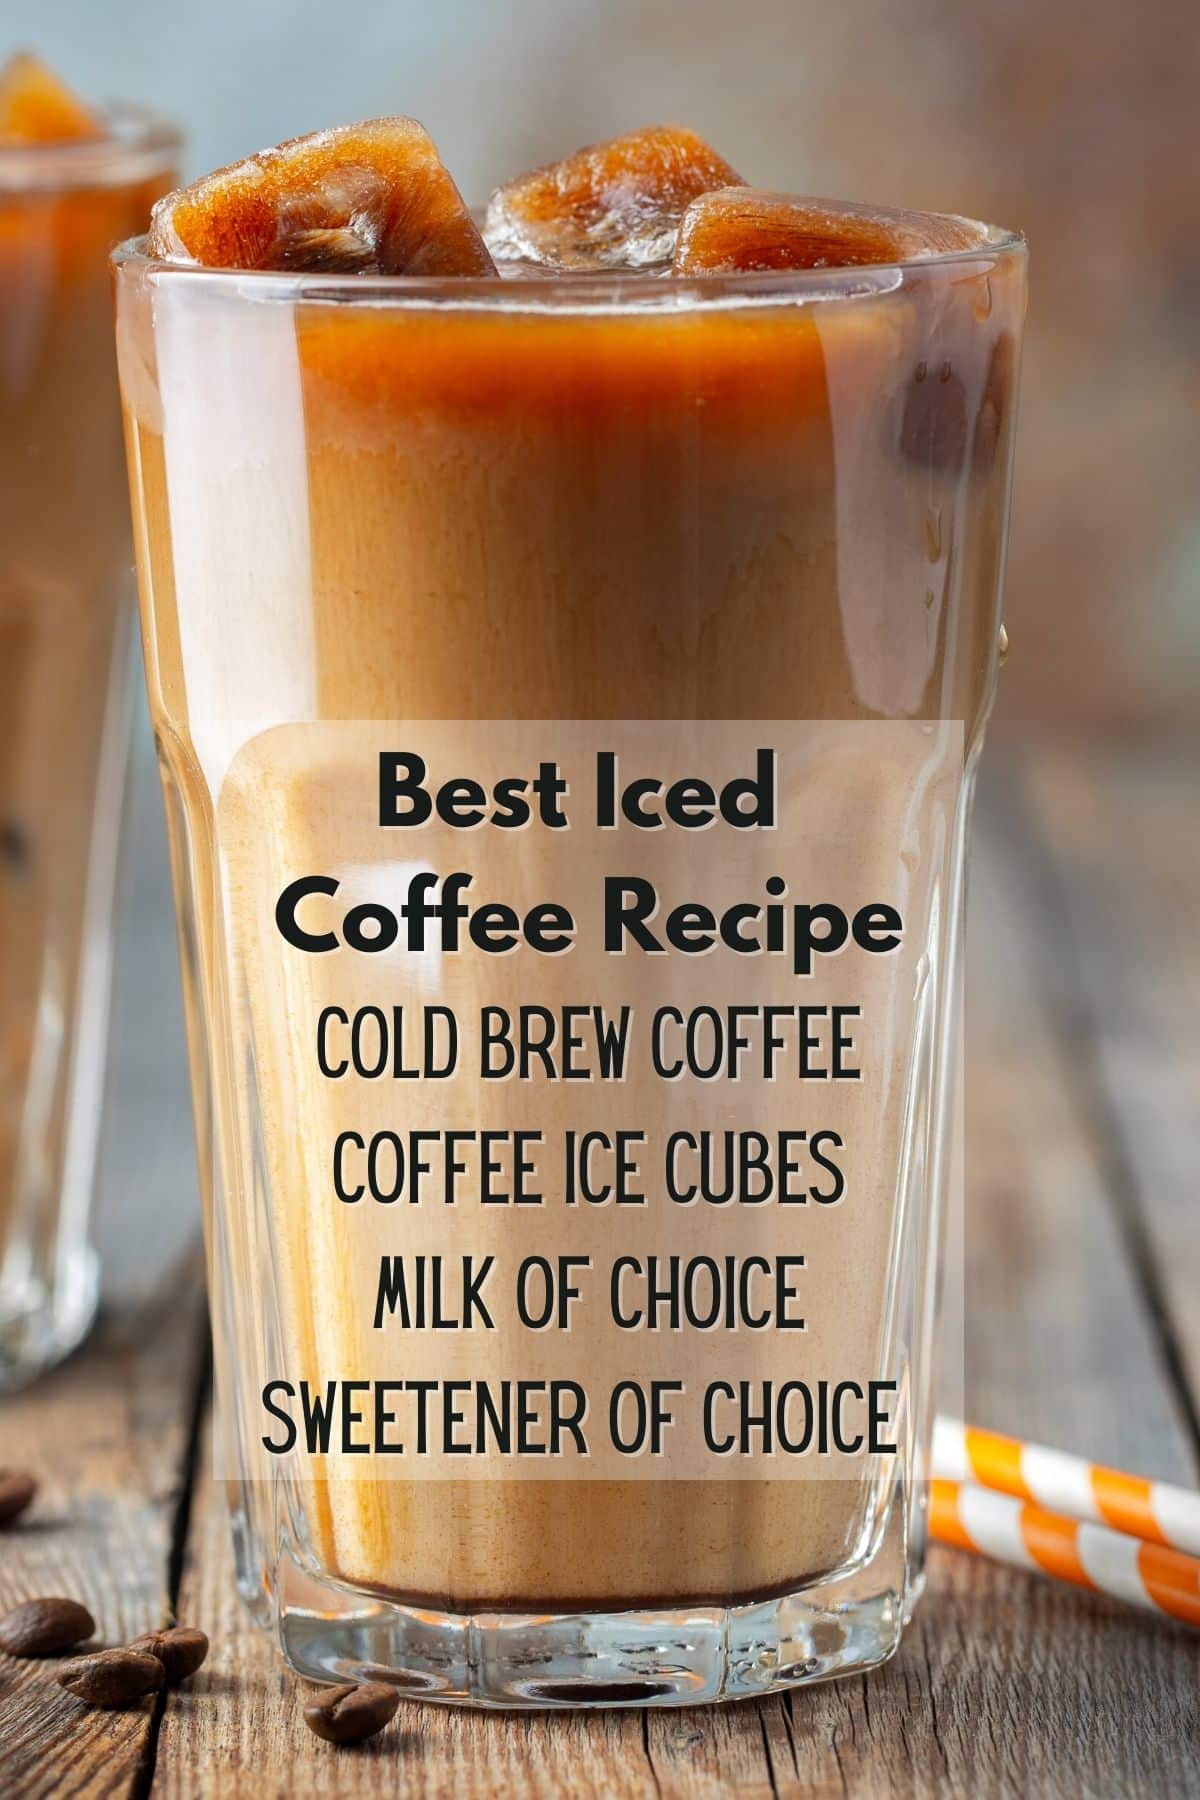 How to Make Iced Coffee, Coffee Recipes